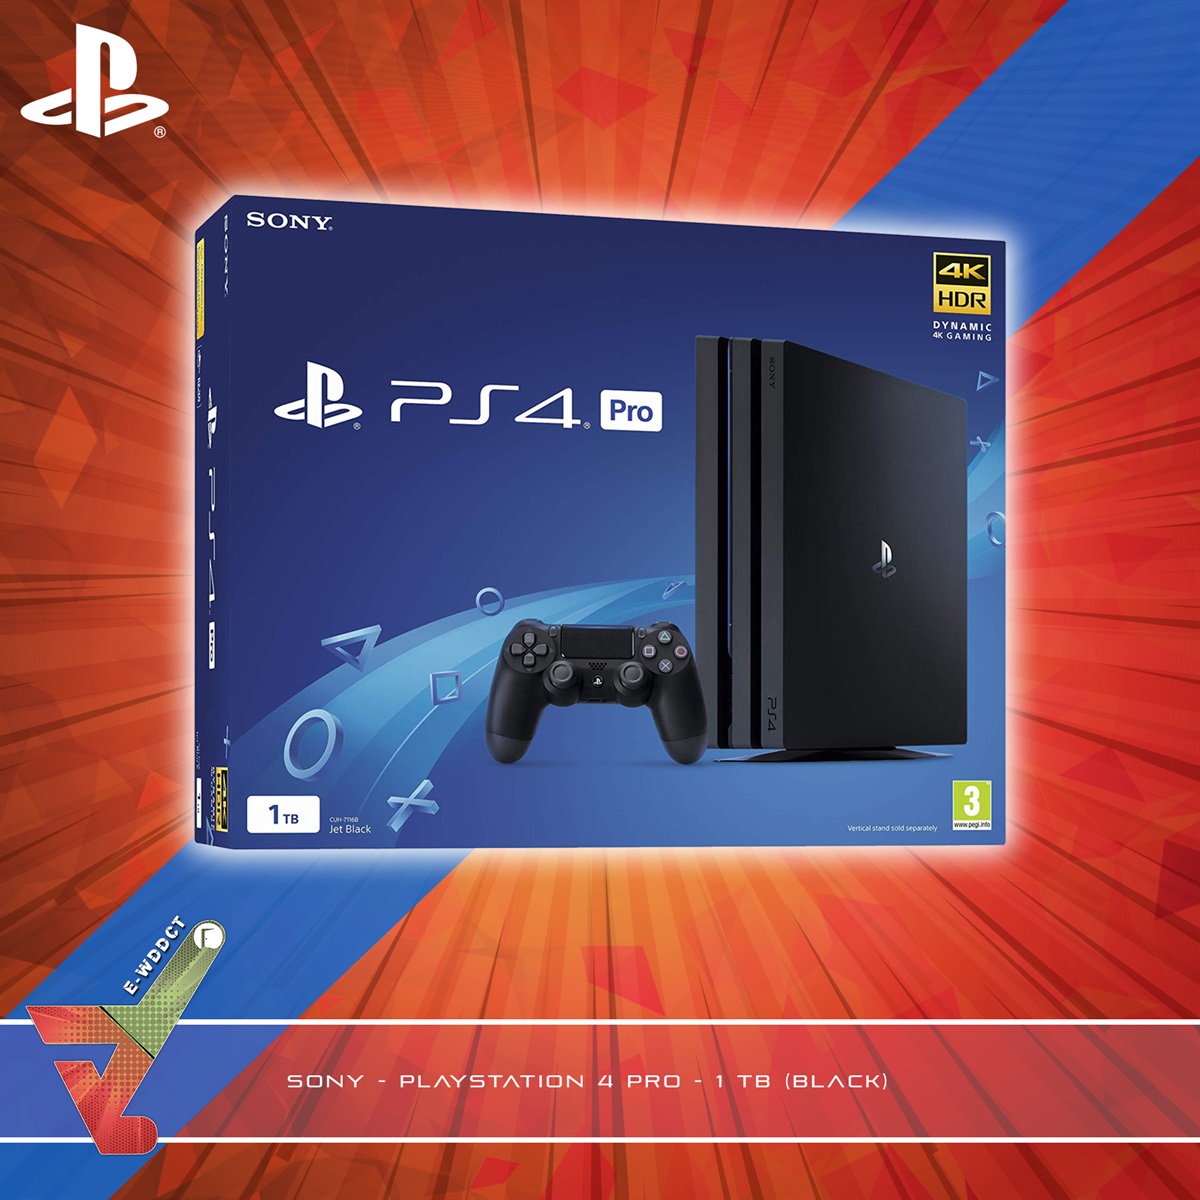 Sony - PlayStation 4 Pro - 1 TB (Black) in Pakistan